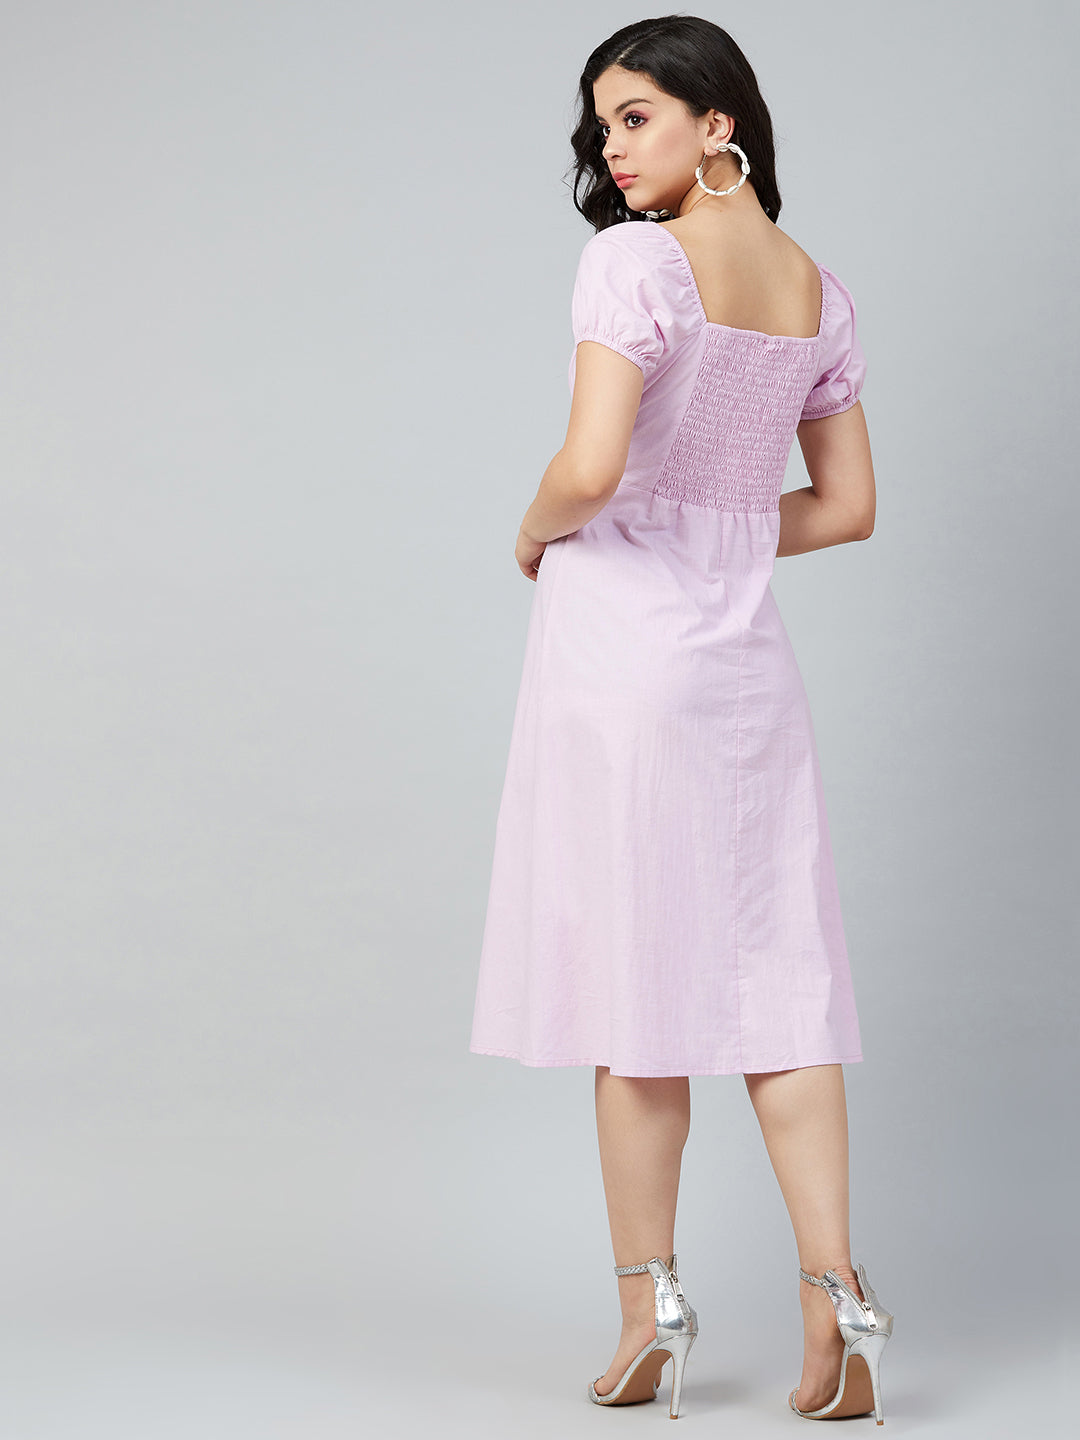 Athena Women Lavender Solid A-Line Dress - Athena Lifestyle